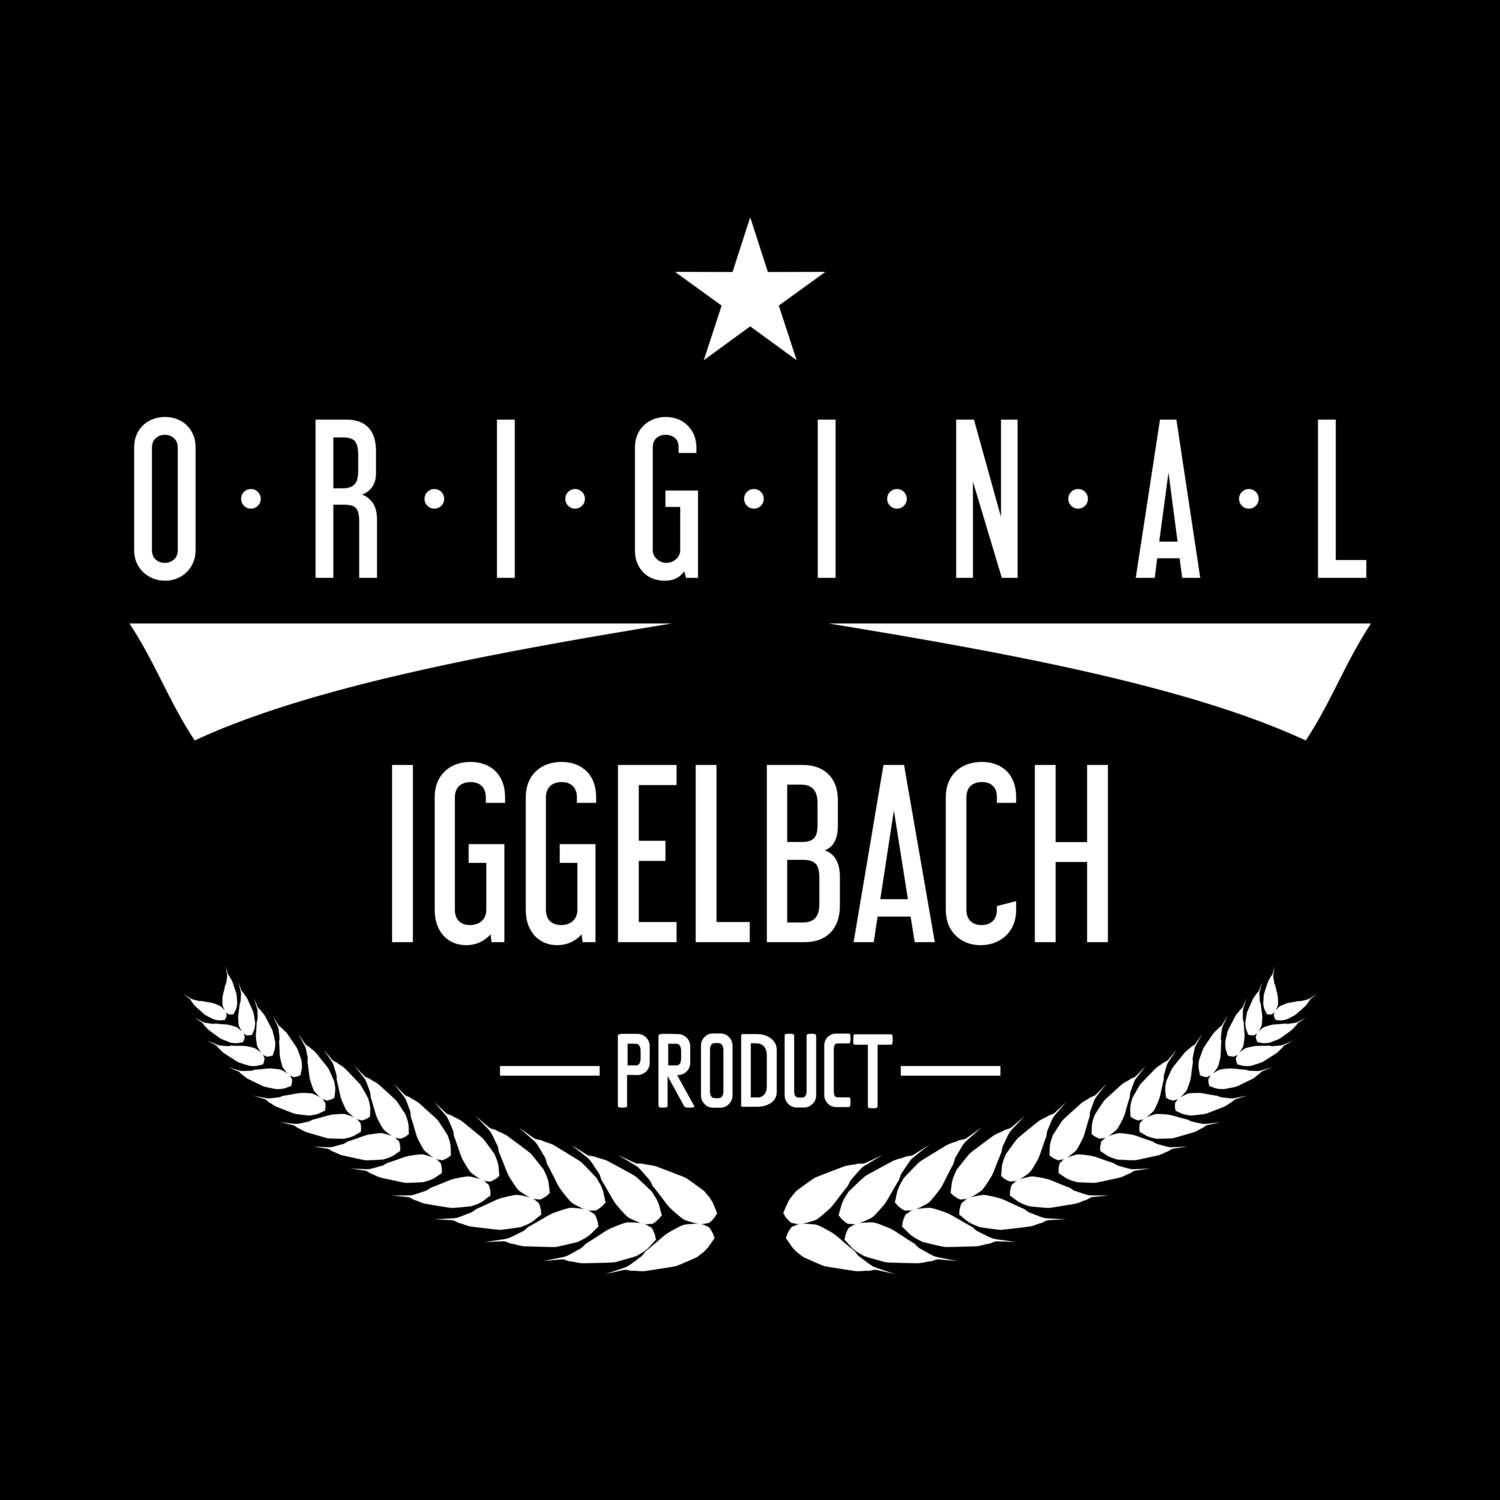 Iggelbach T-Shirt »Original Product«